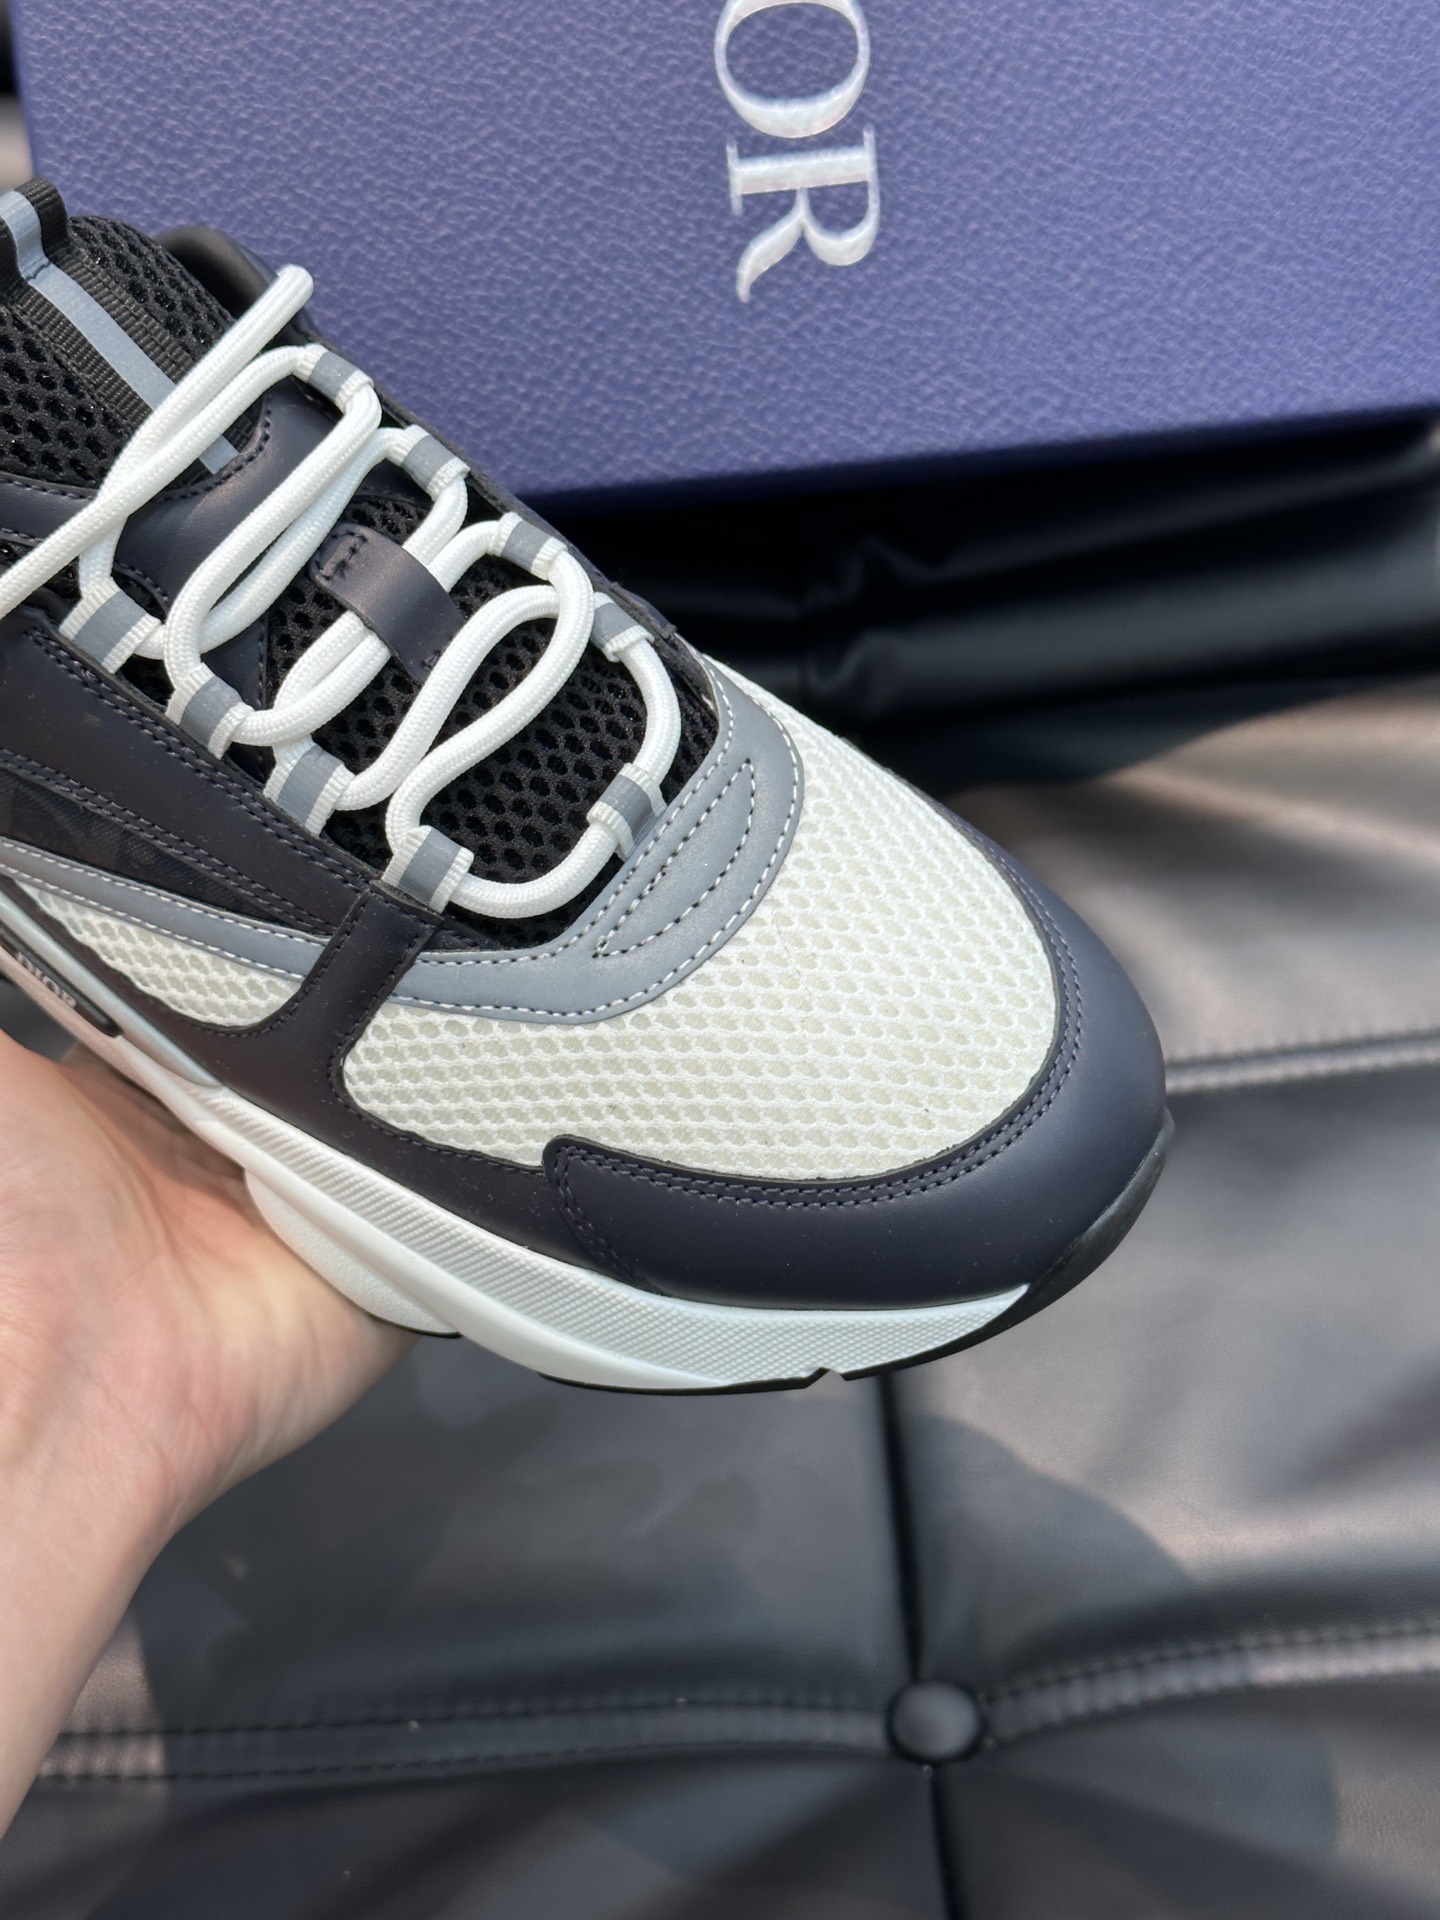 ️️D️x高版本B22男士慢跑时尚运动鞋这款单品从复古慢跑鞋汲取灵感采用厚实的低帮设计以黑色牛皮革以及网